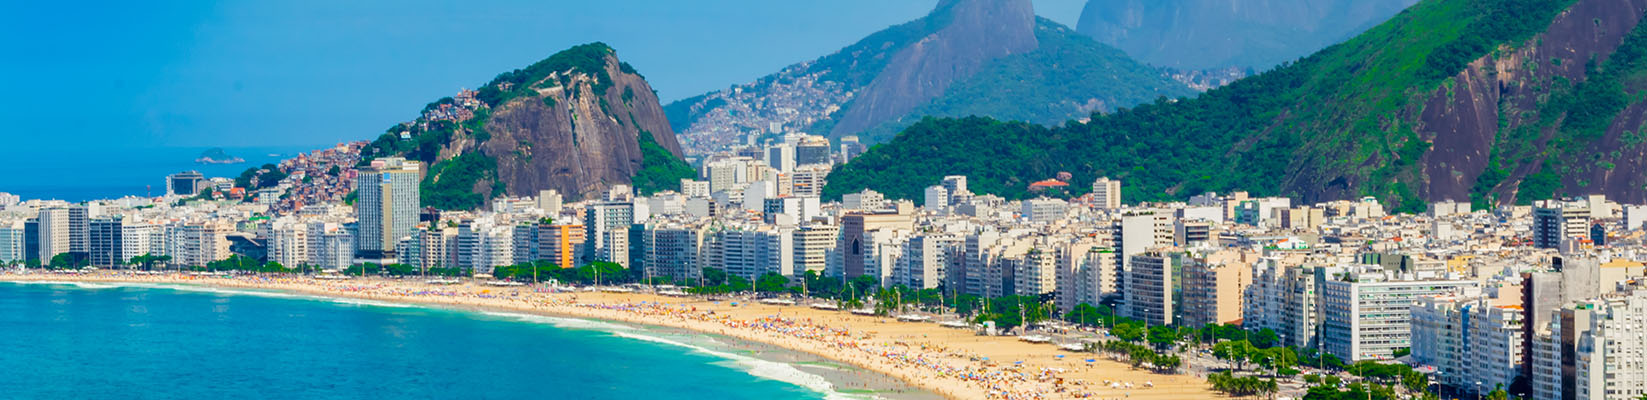 Rio de Janeiro Beach